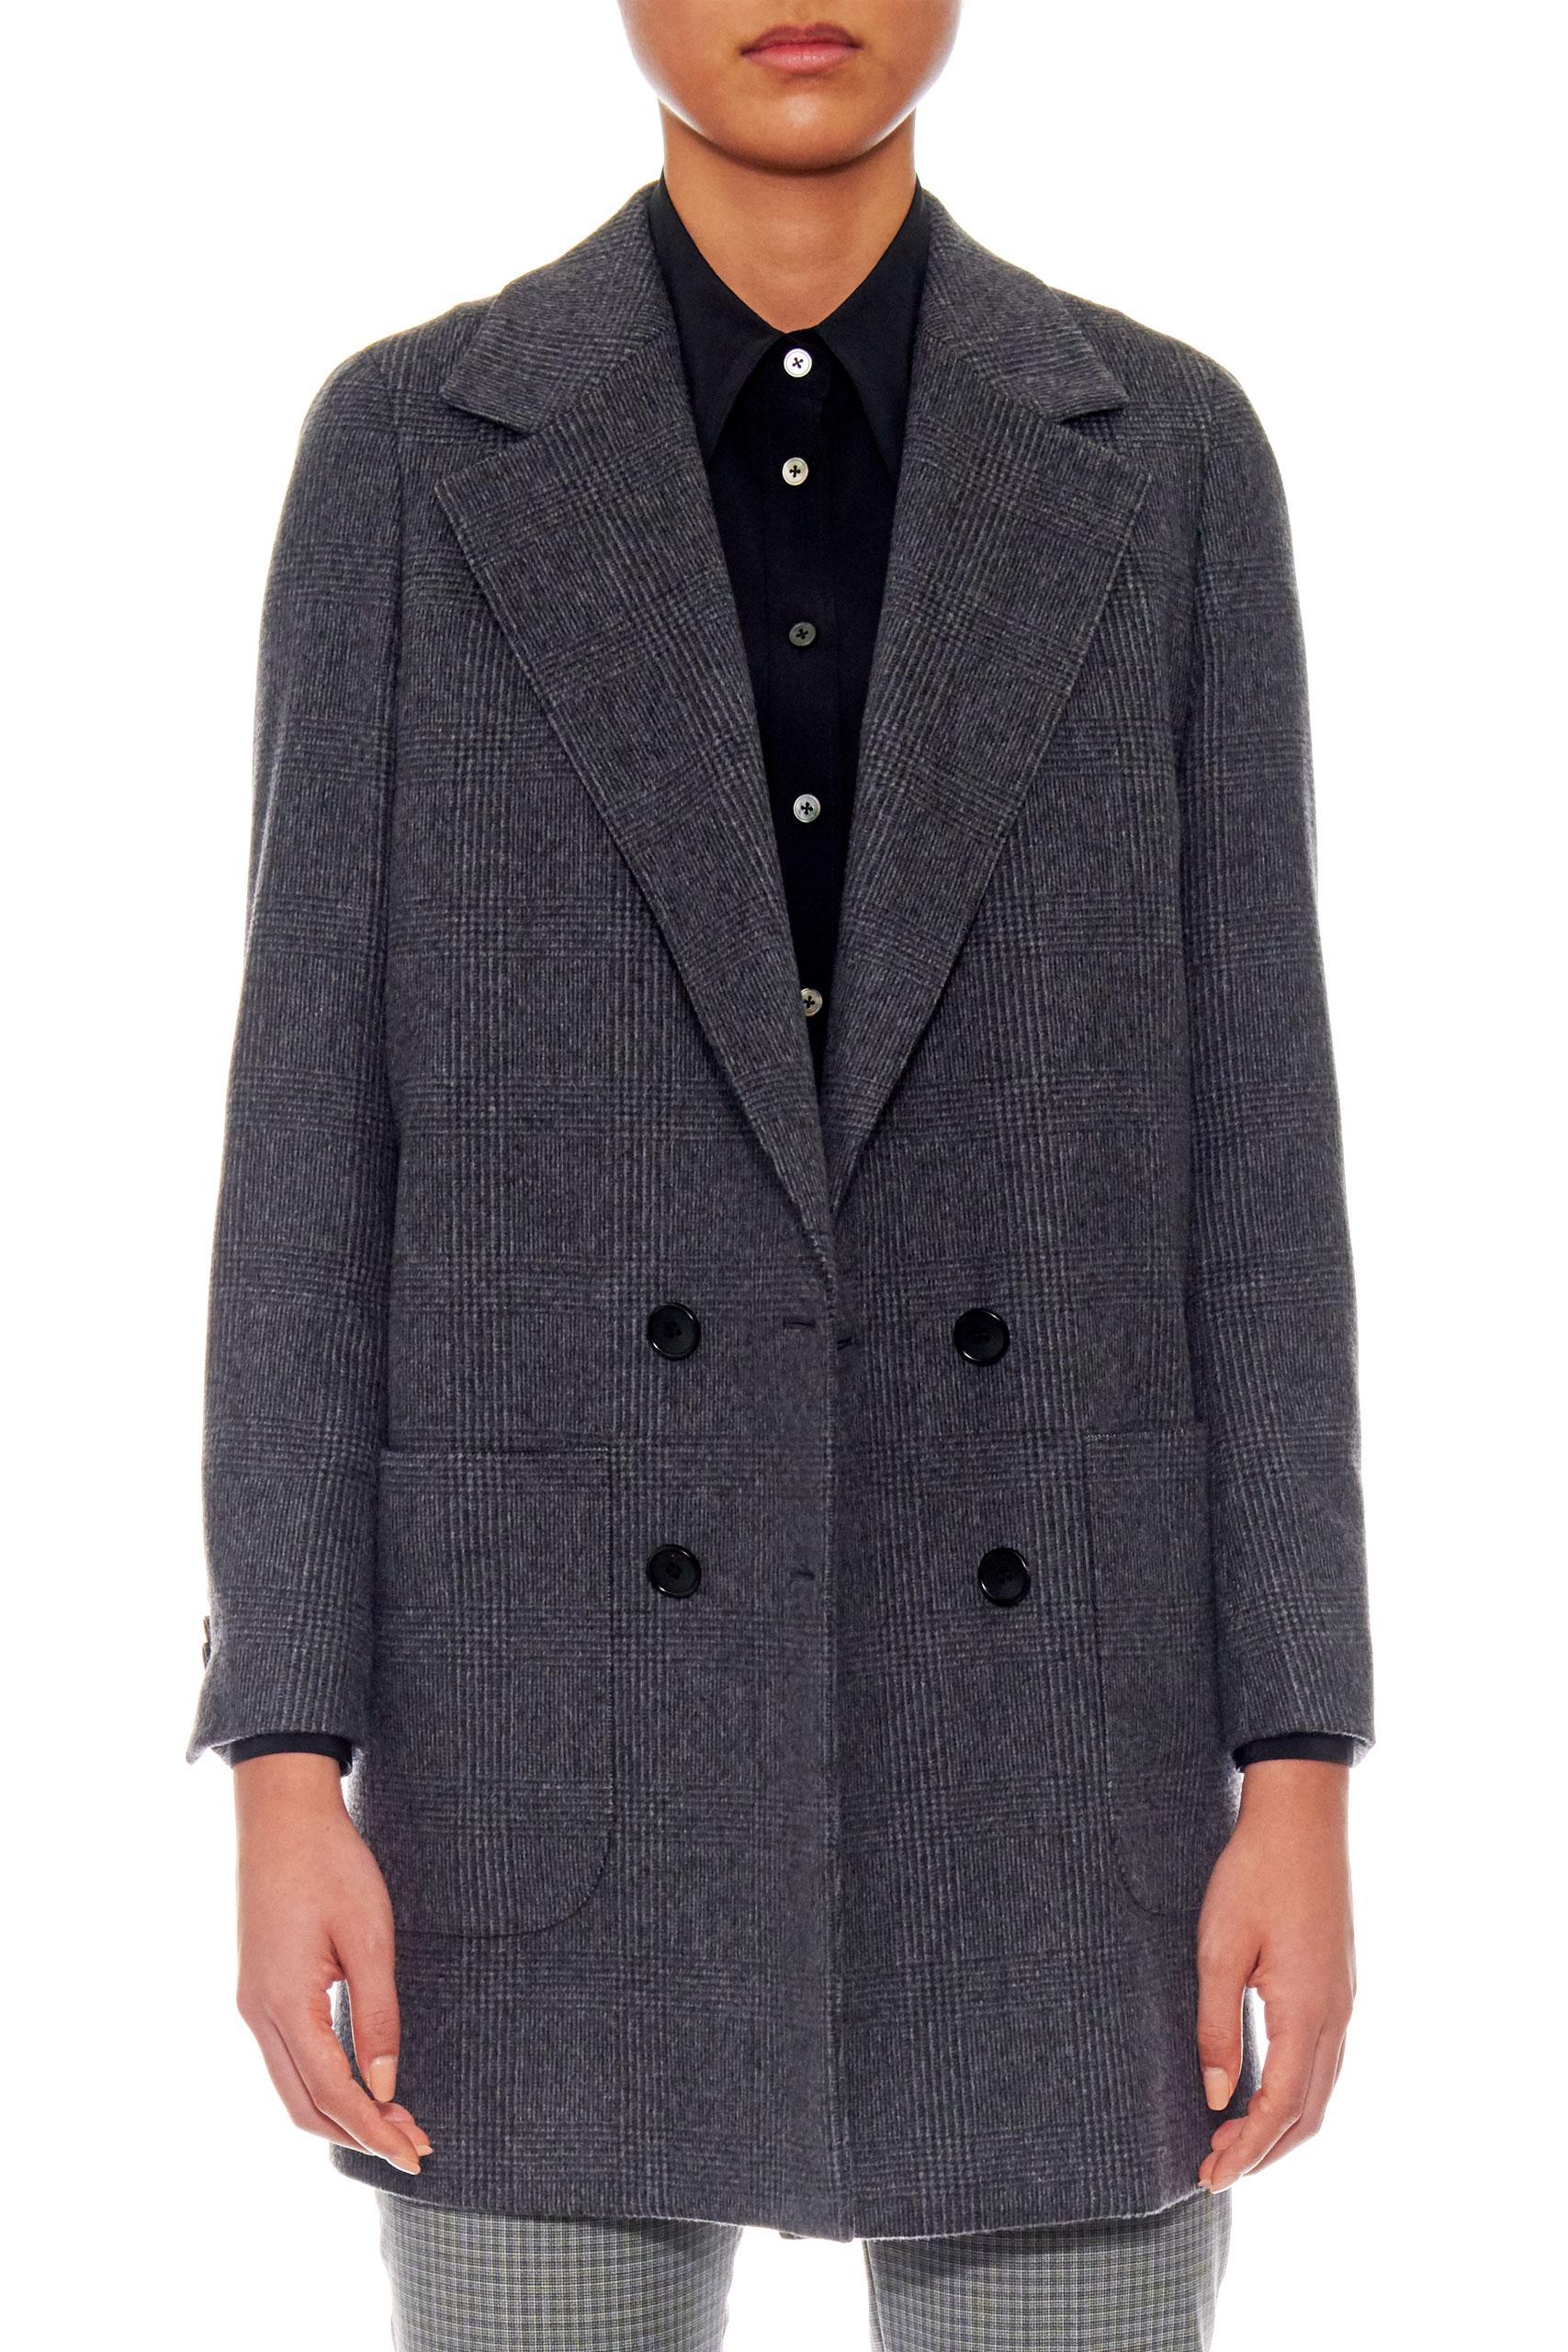 Saint-Etienne – Oversized wool jacket with patch pockets in dark grey0